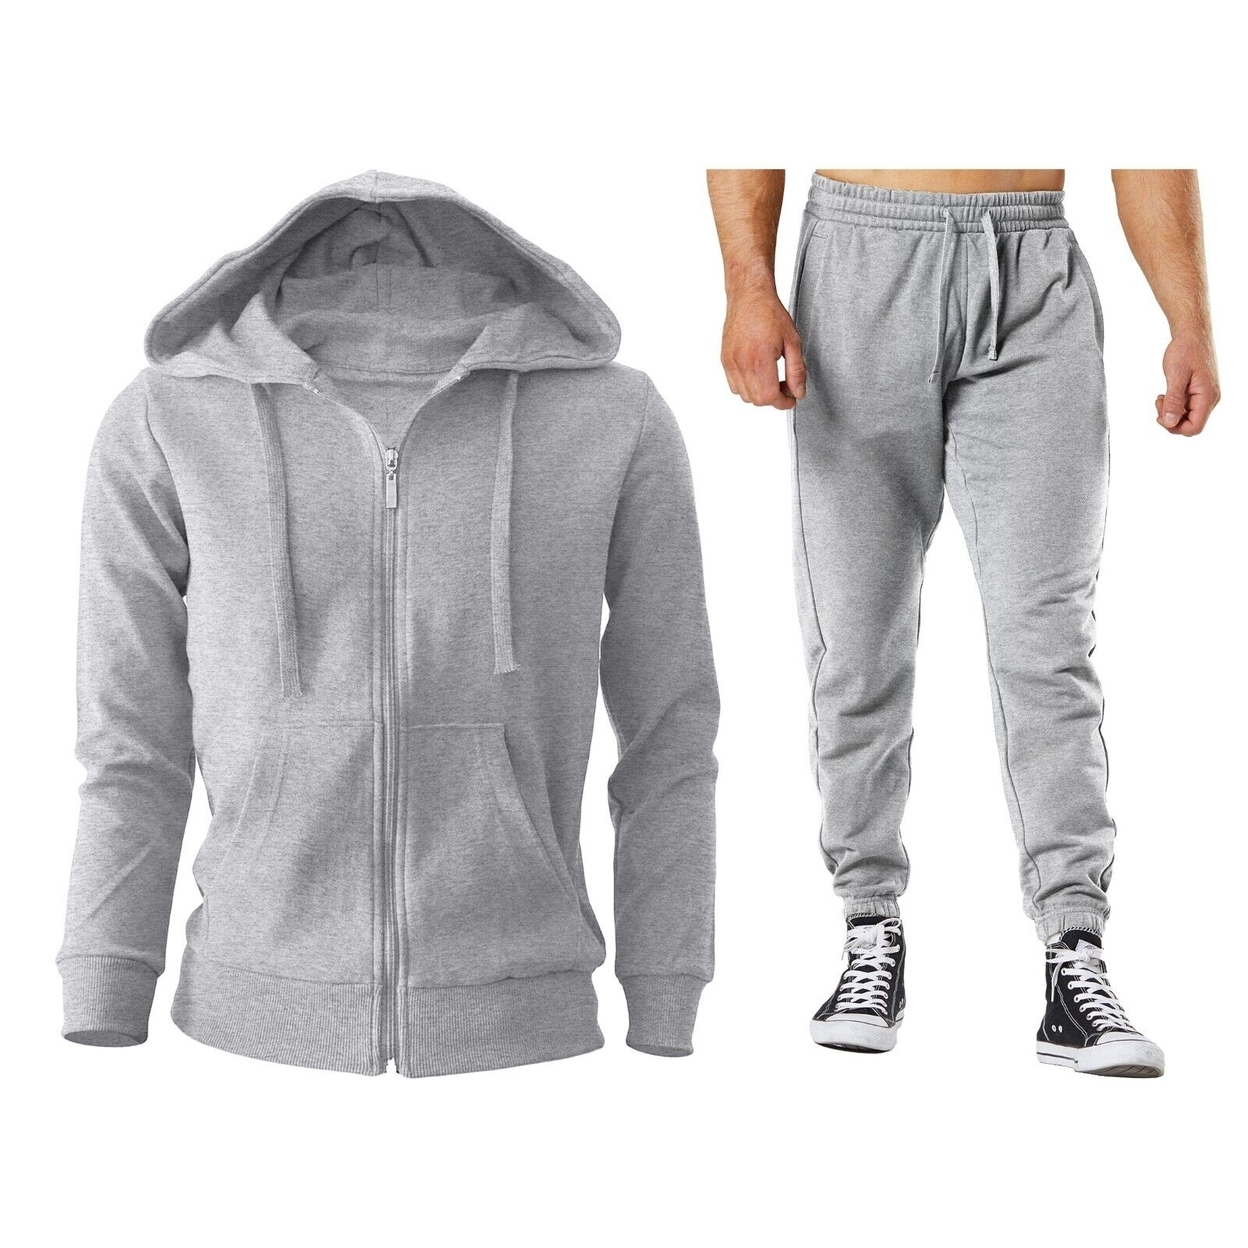 2-Piece: Men's Winter Warm Cozy Athletic Multi-Pockets BIG & TALL Sweatsuit Set - Grey, X-large